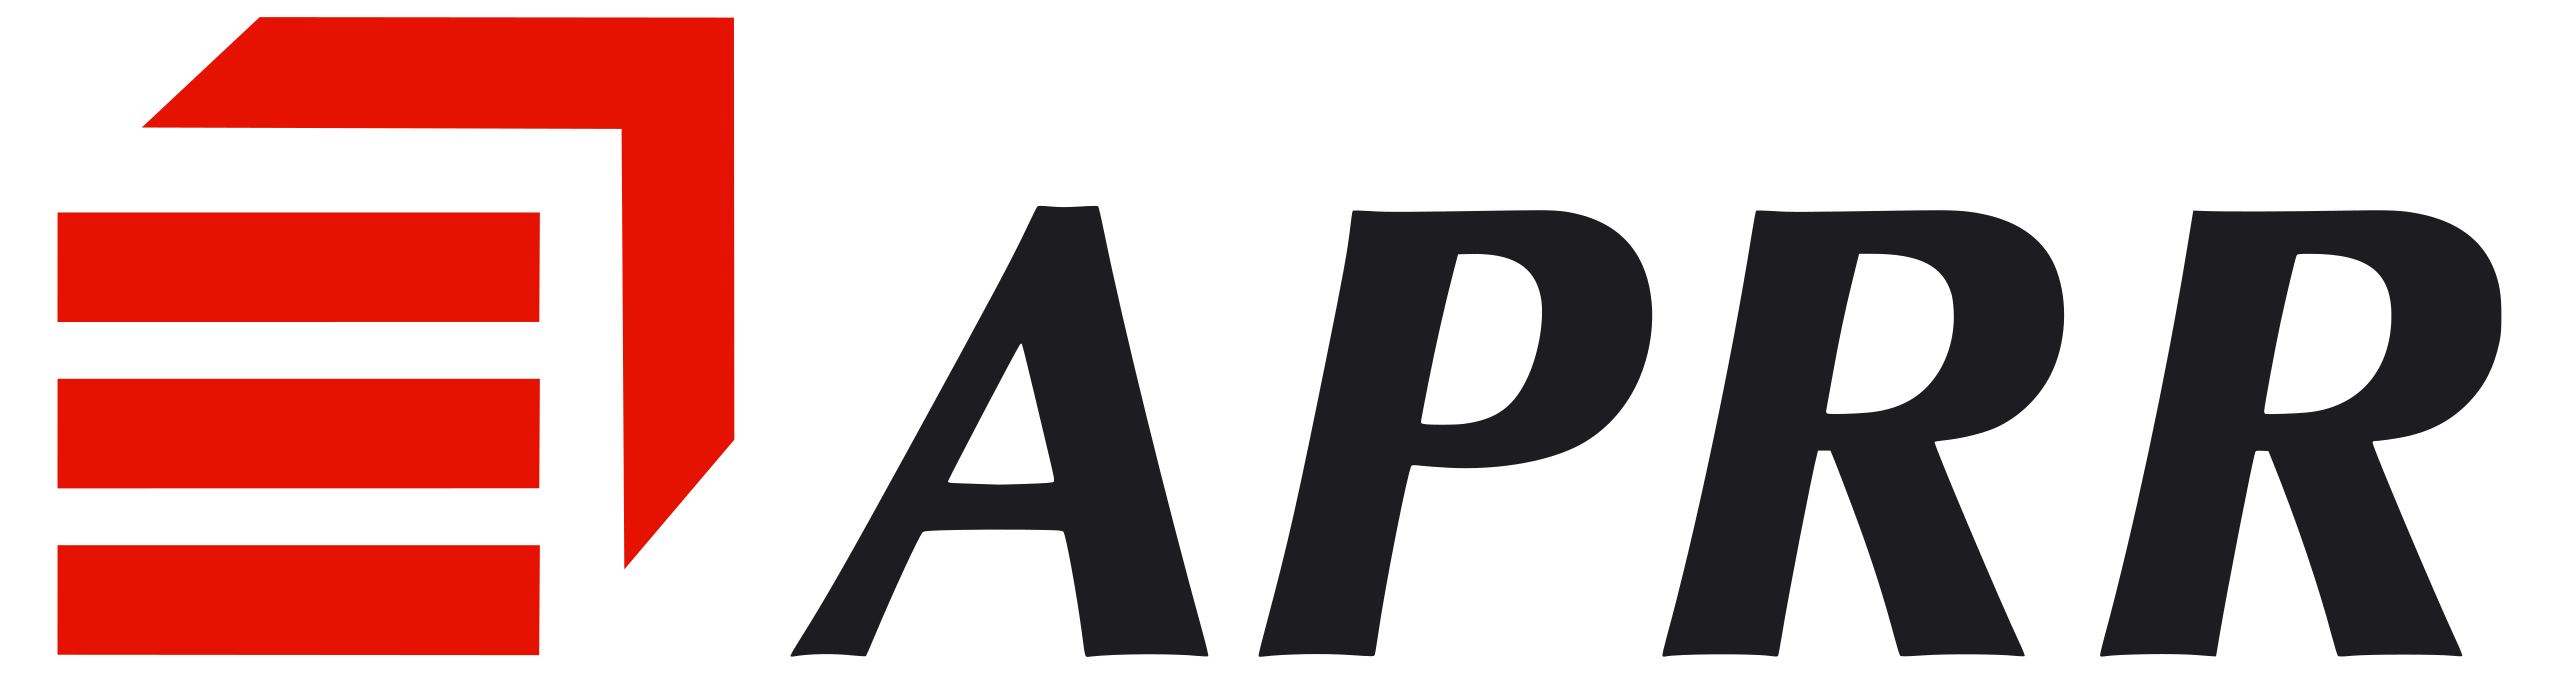 APRR logo-1